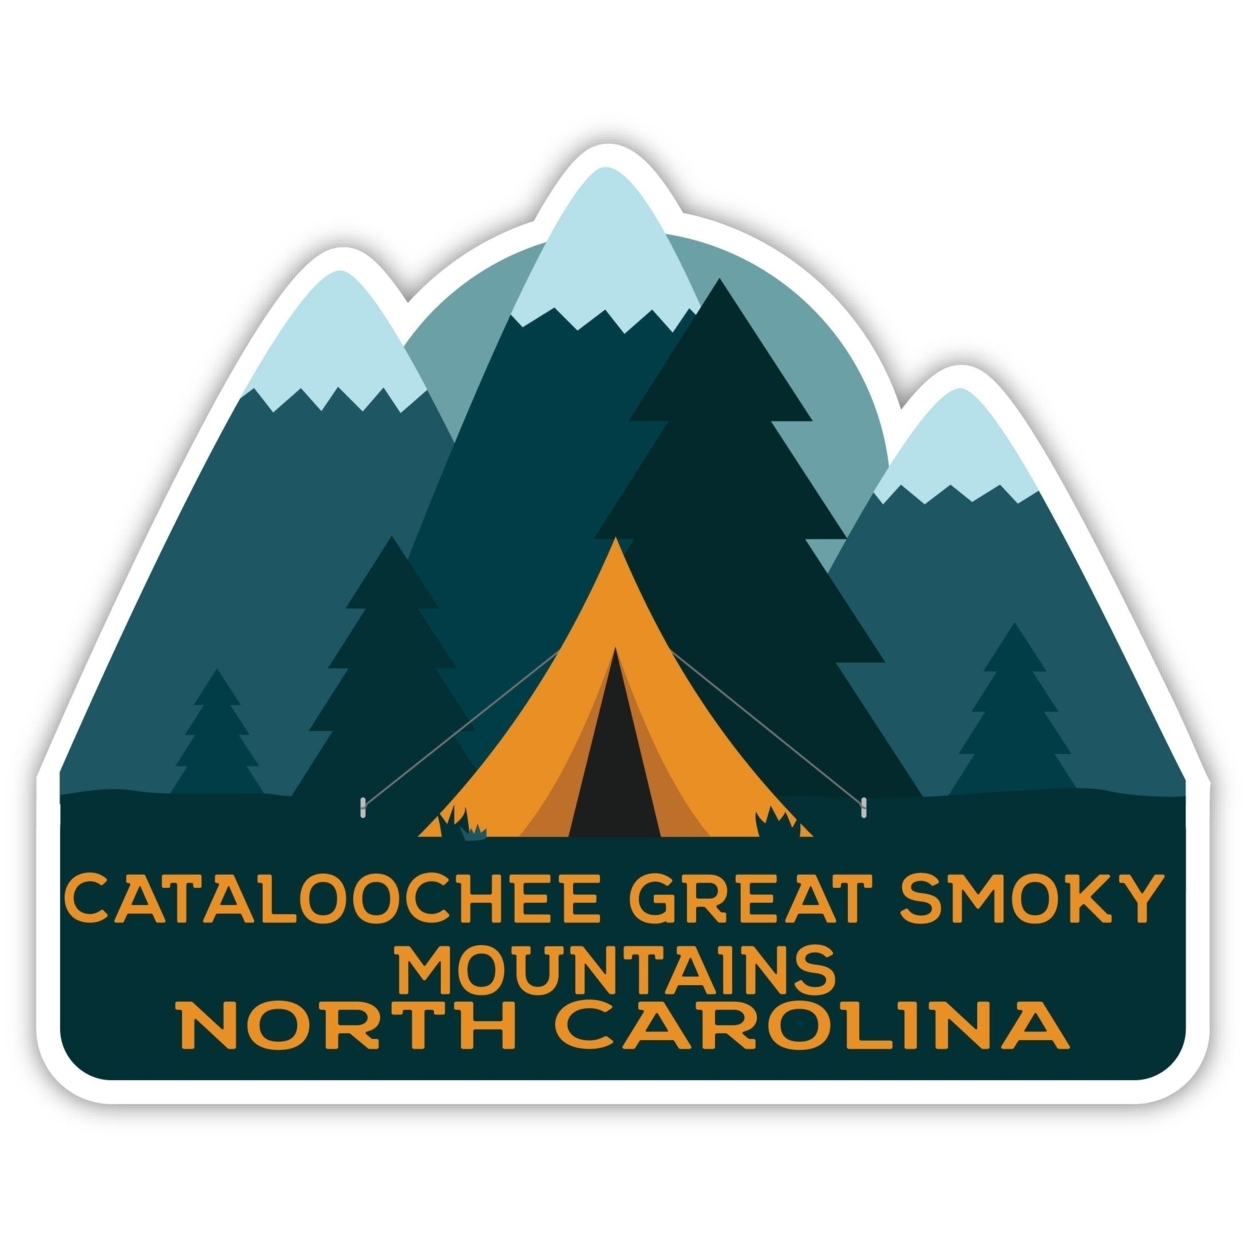 Cataloochee Great Smoky Mountains North Carolina Souvenir Decorative Stickers (Choose Theme And Size) - Single Unit, 12-Inch, Tent